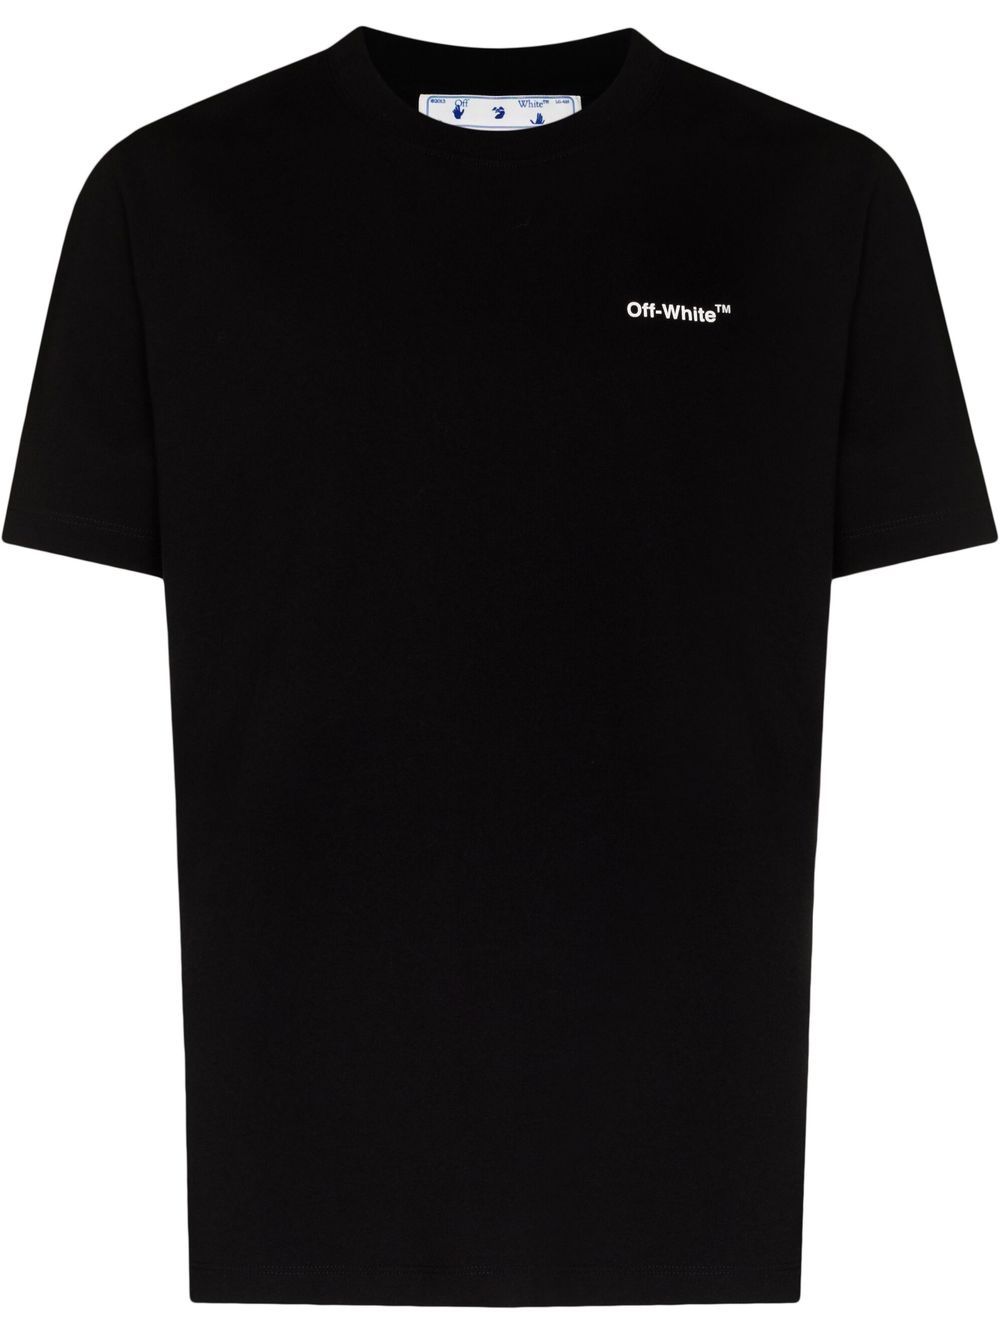 OFF-WHITE CARAVAGGIO ARROW 图案短袖T恤